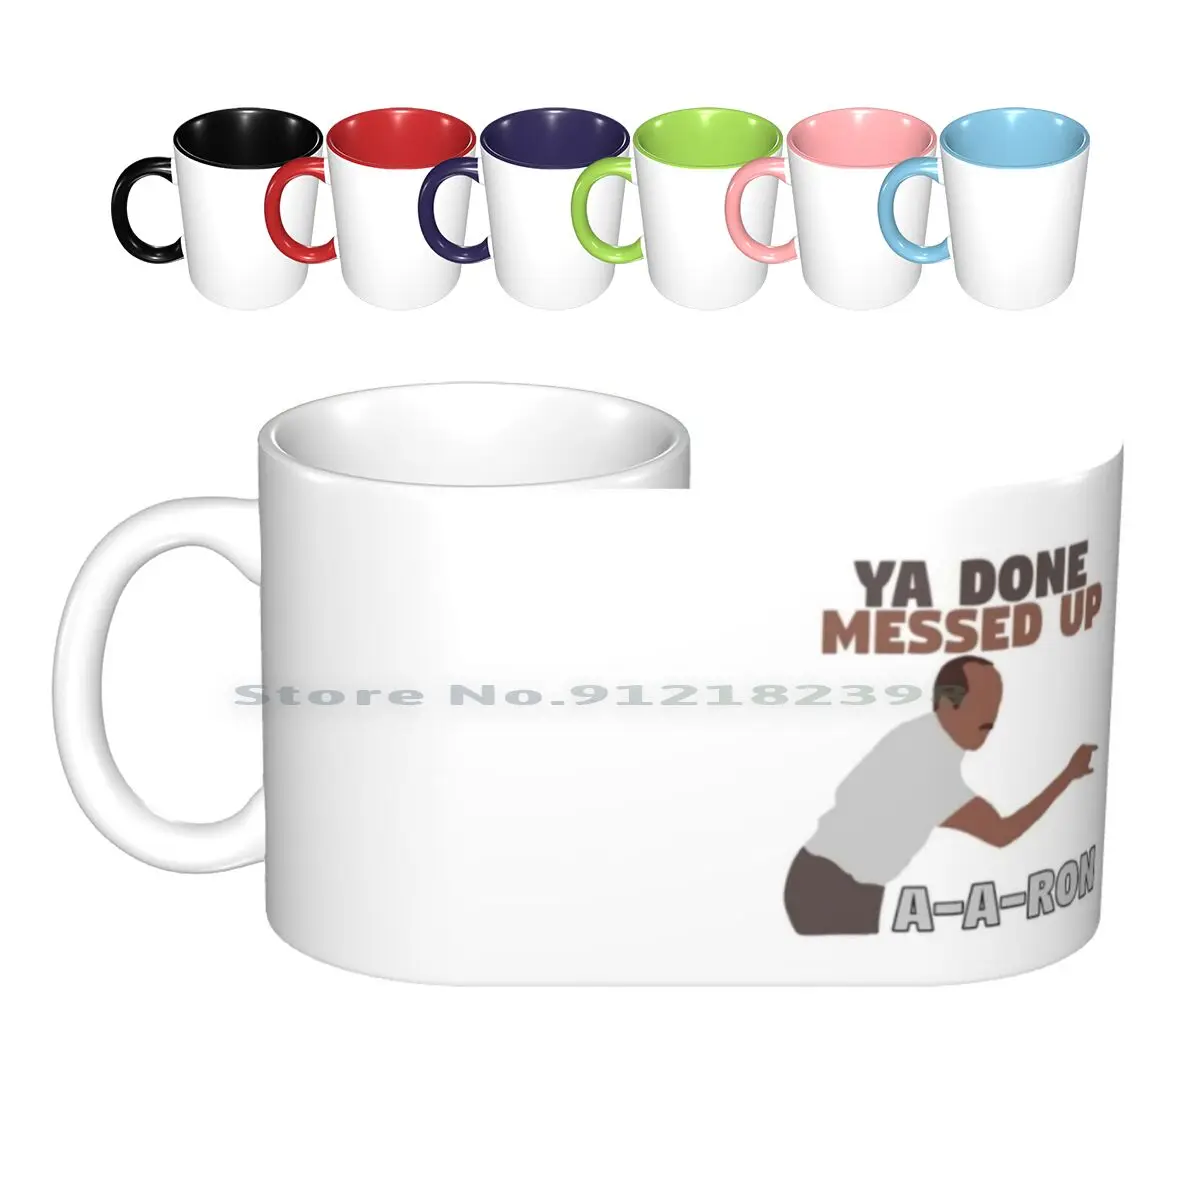 

Key And Peele - Ya Done Messed Up A - A - Ron Ceramic Mugs Coffee Cups Milk Tea Mug Key And Peele Substitute Teacher A A Ron Cre